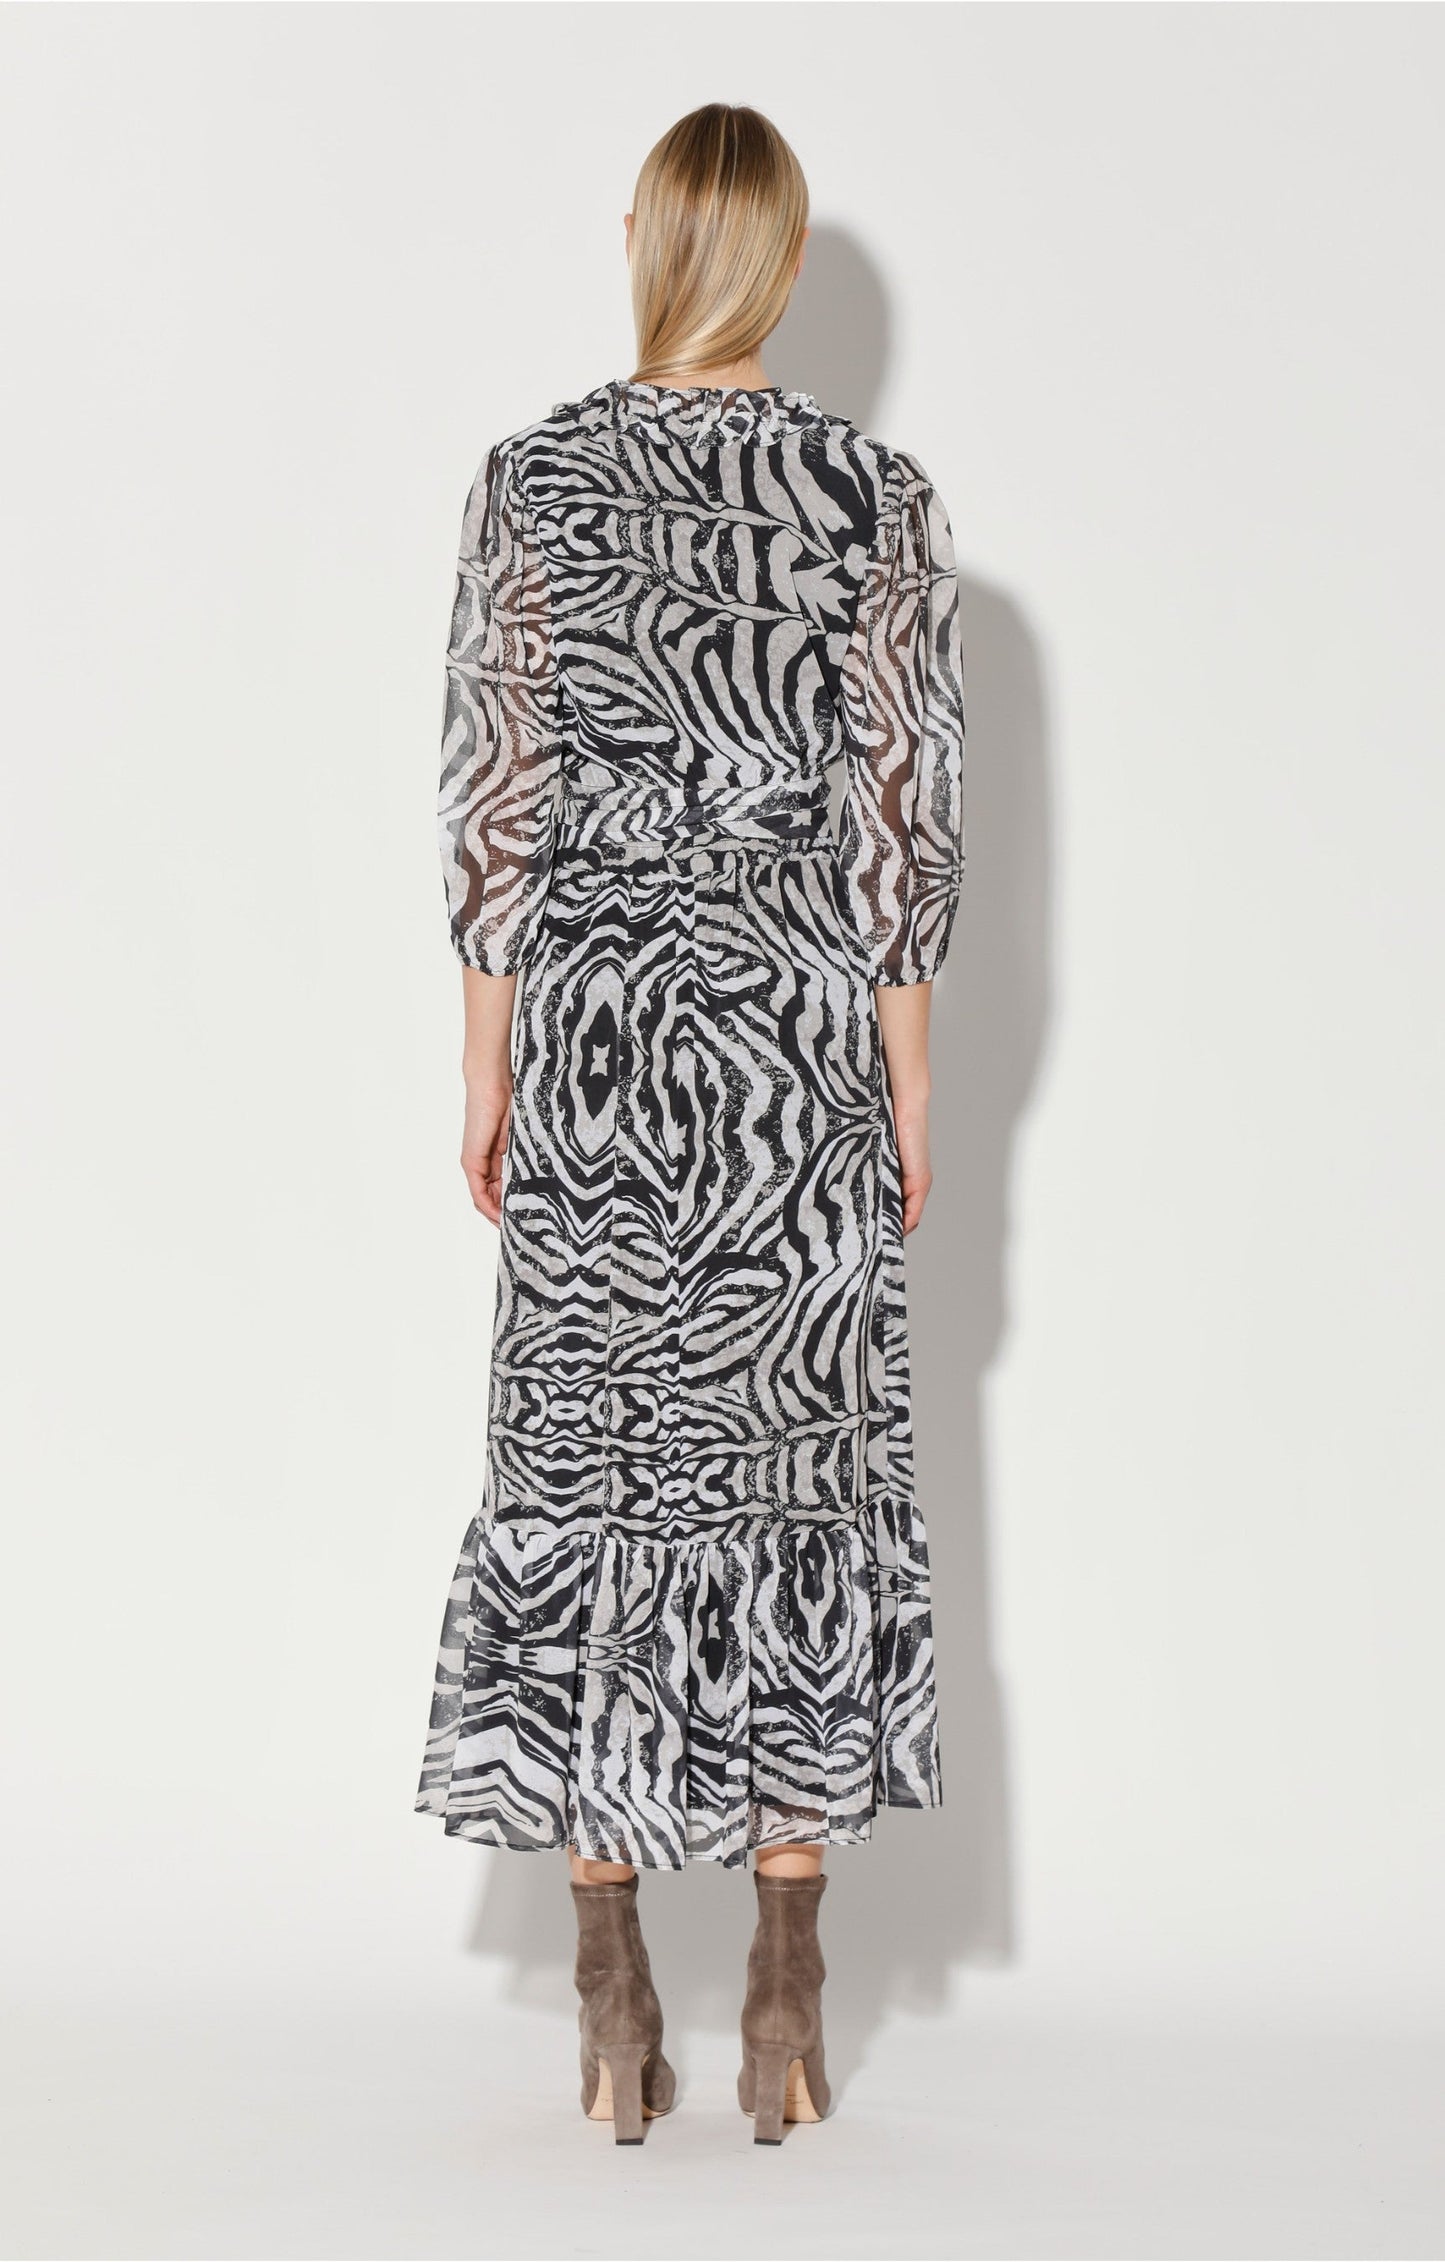 Hilani Skirt, Zebra Batik by Walter Baker